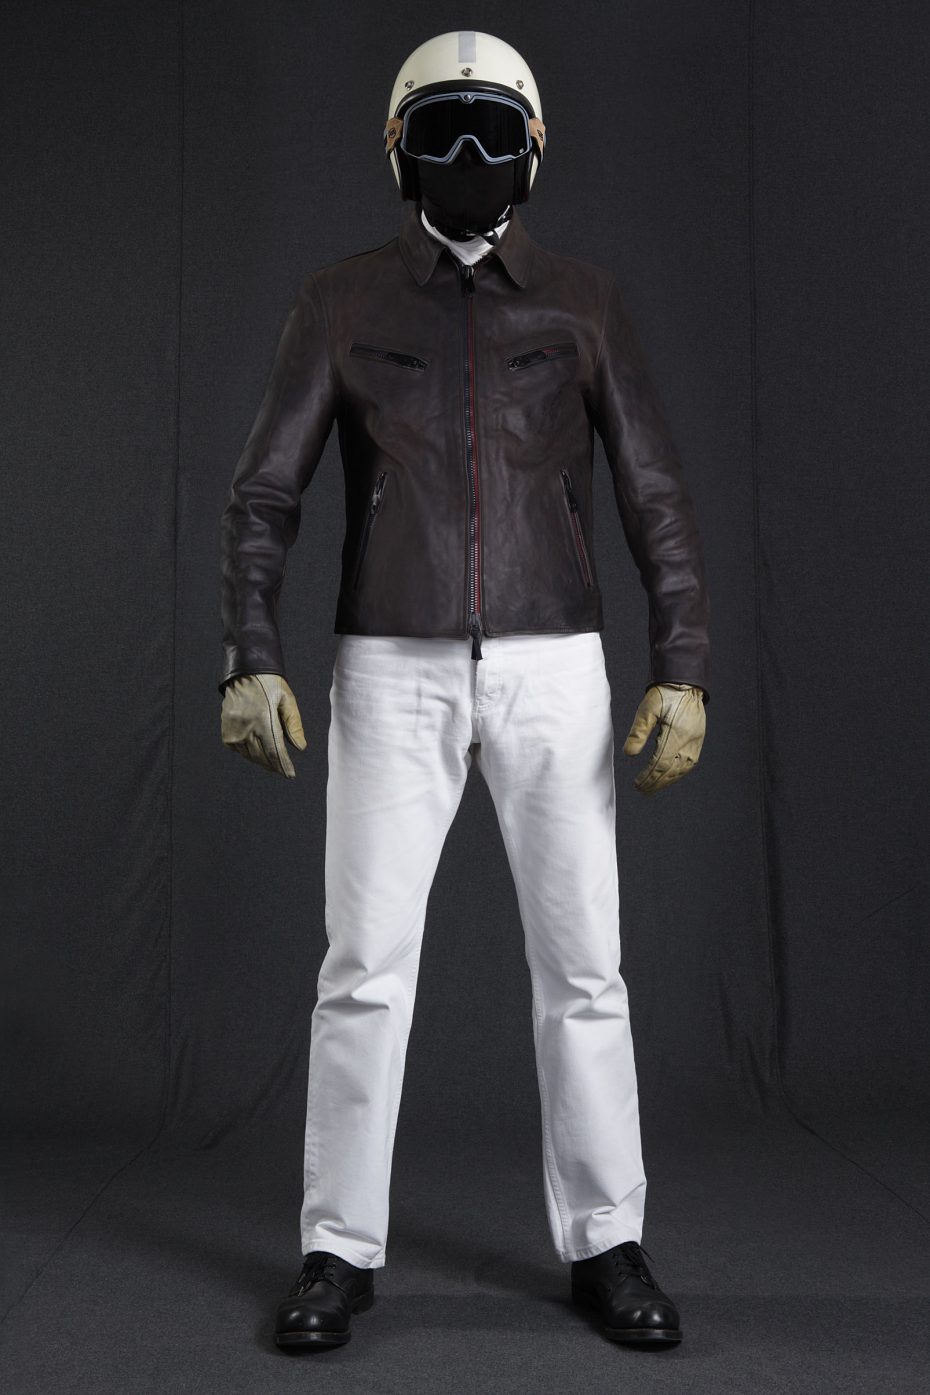 BiondoEndurance_Motorräder_LGB_003_Leather-Jacket_DkBrown_Portrait_Front